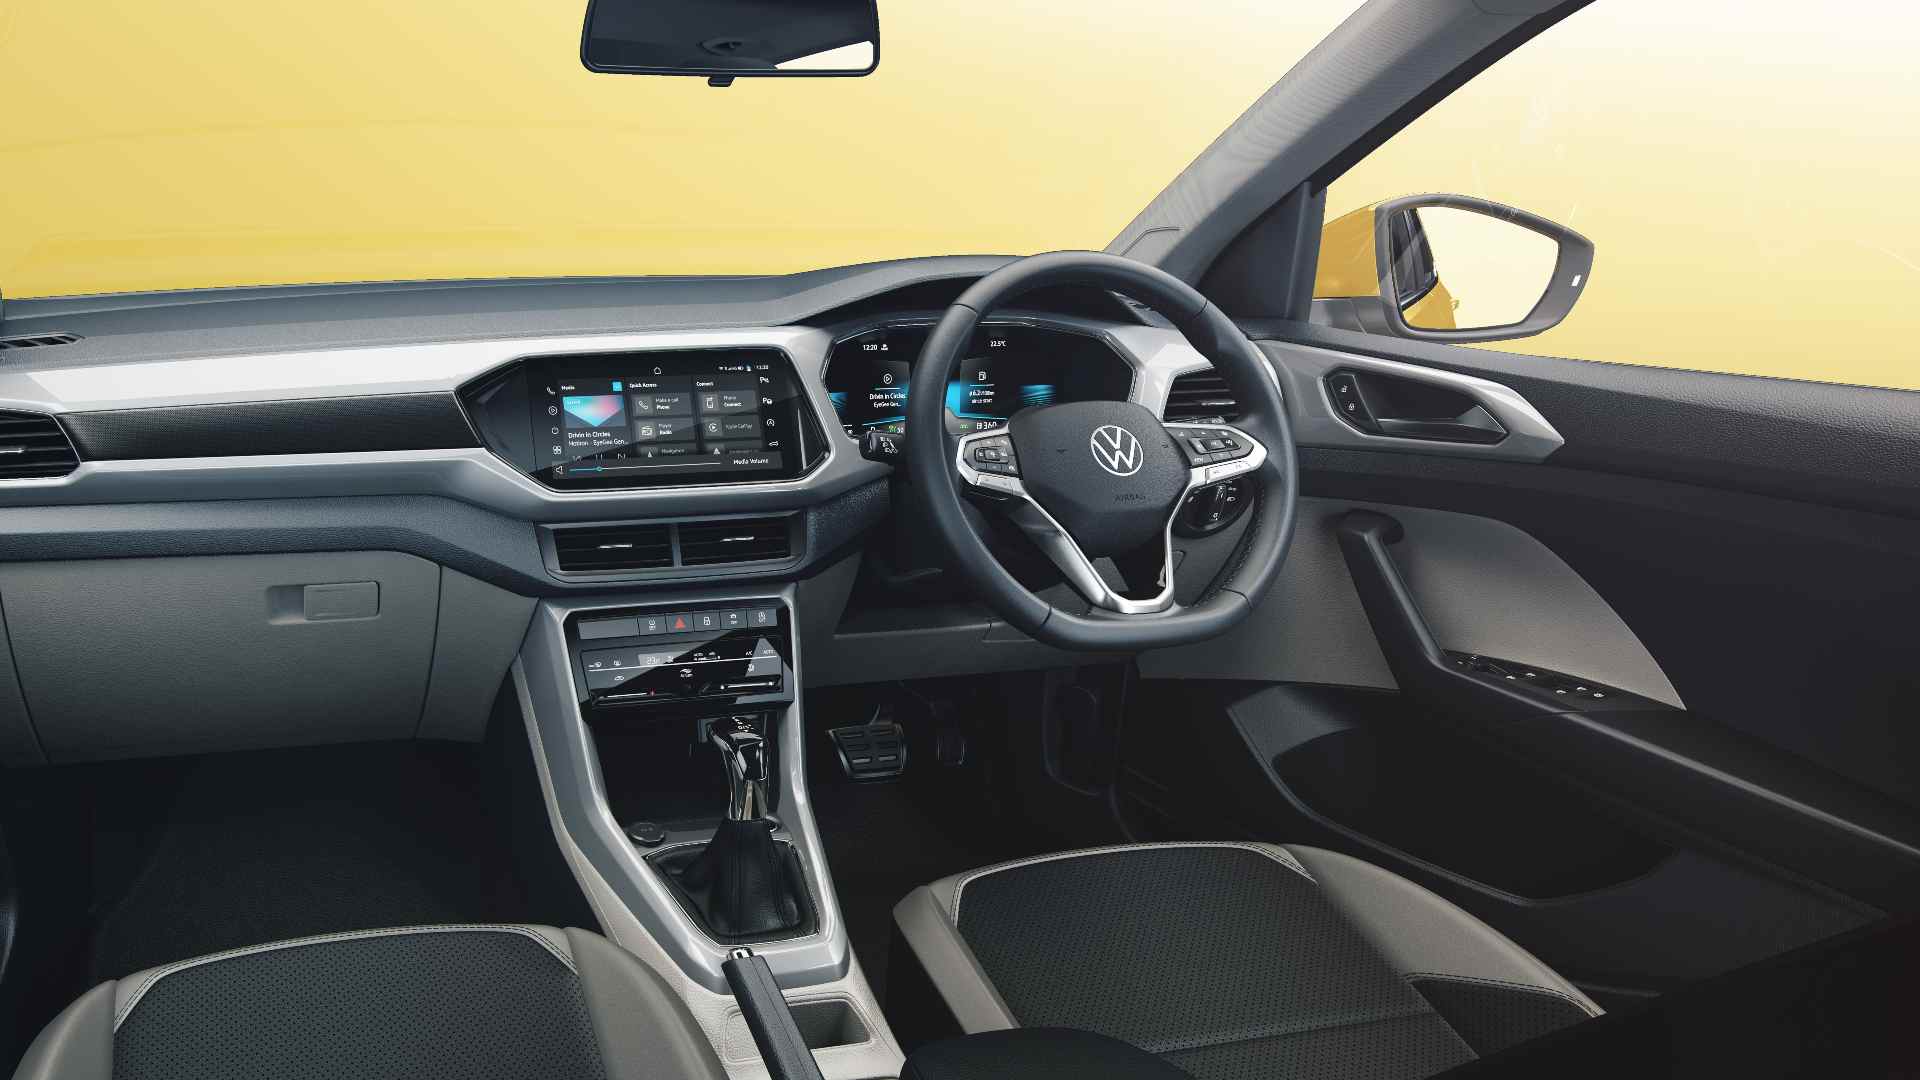 The Volkswagen Taigun will aim to one-up the Skoda Kushaq with its digital instruments display. Image: Volkswagen